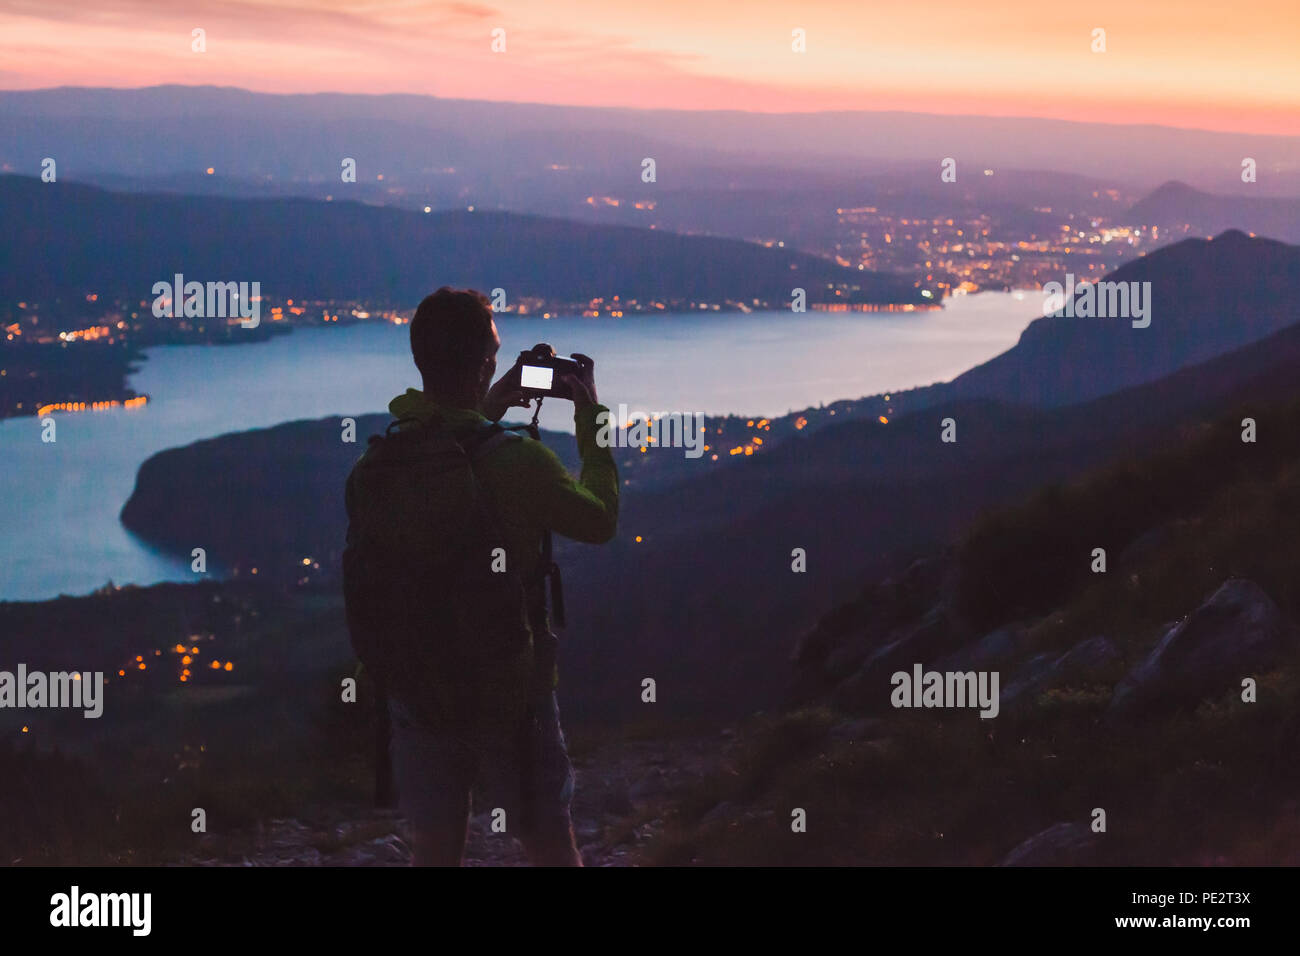 photographer taking photo on dslr camera at night after sunset twilights, city panoramic mountain landscape low light, dusk Stock Photo